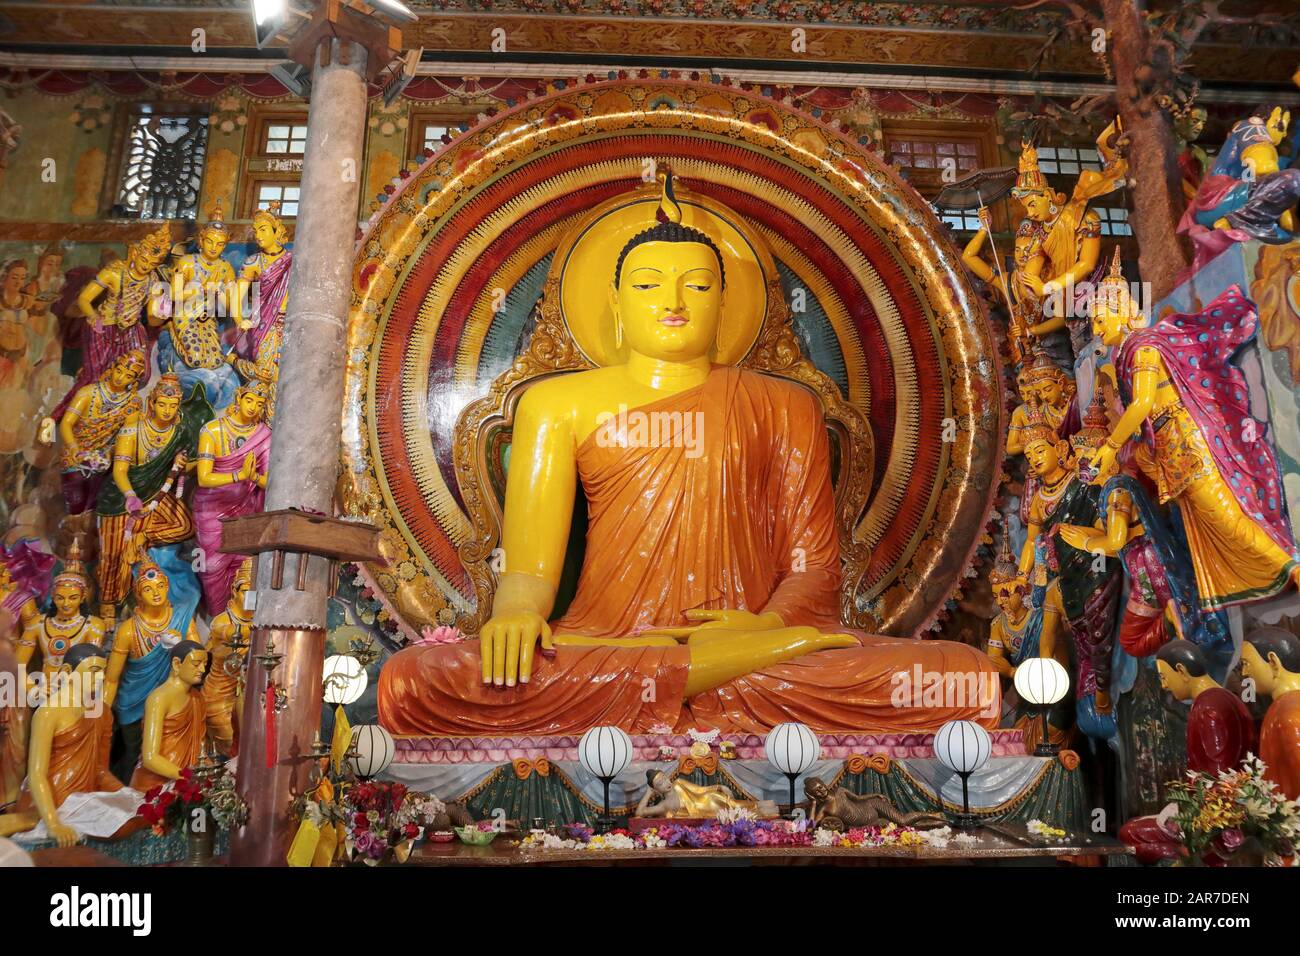 Brightly coloured figures flanking a large seated buddha statue in the Gangaramaya Temple, Colombo, Sri Lanka Stock Photo